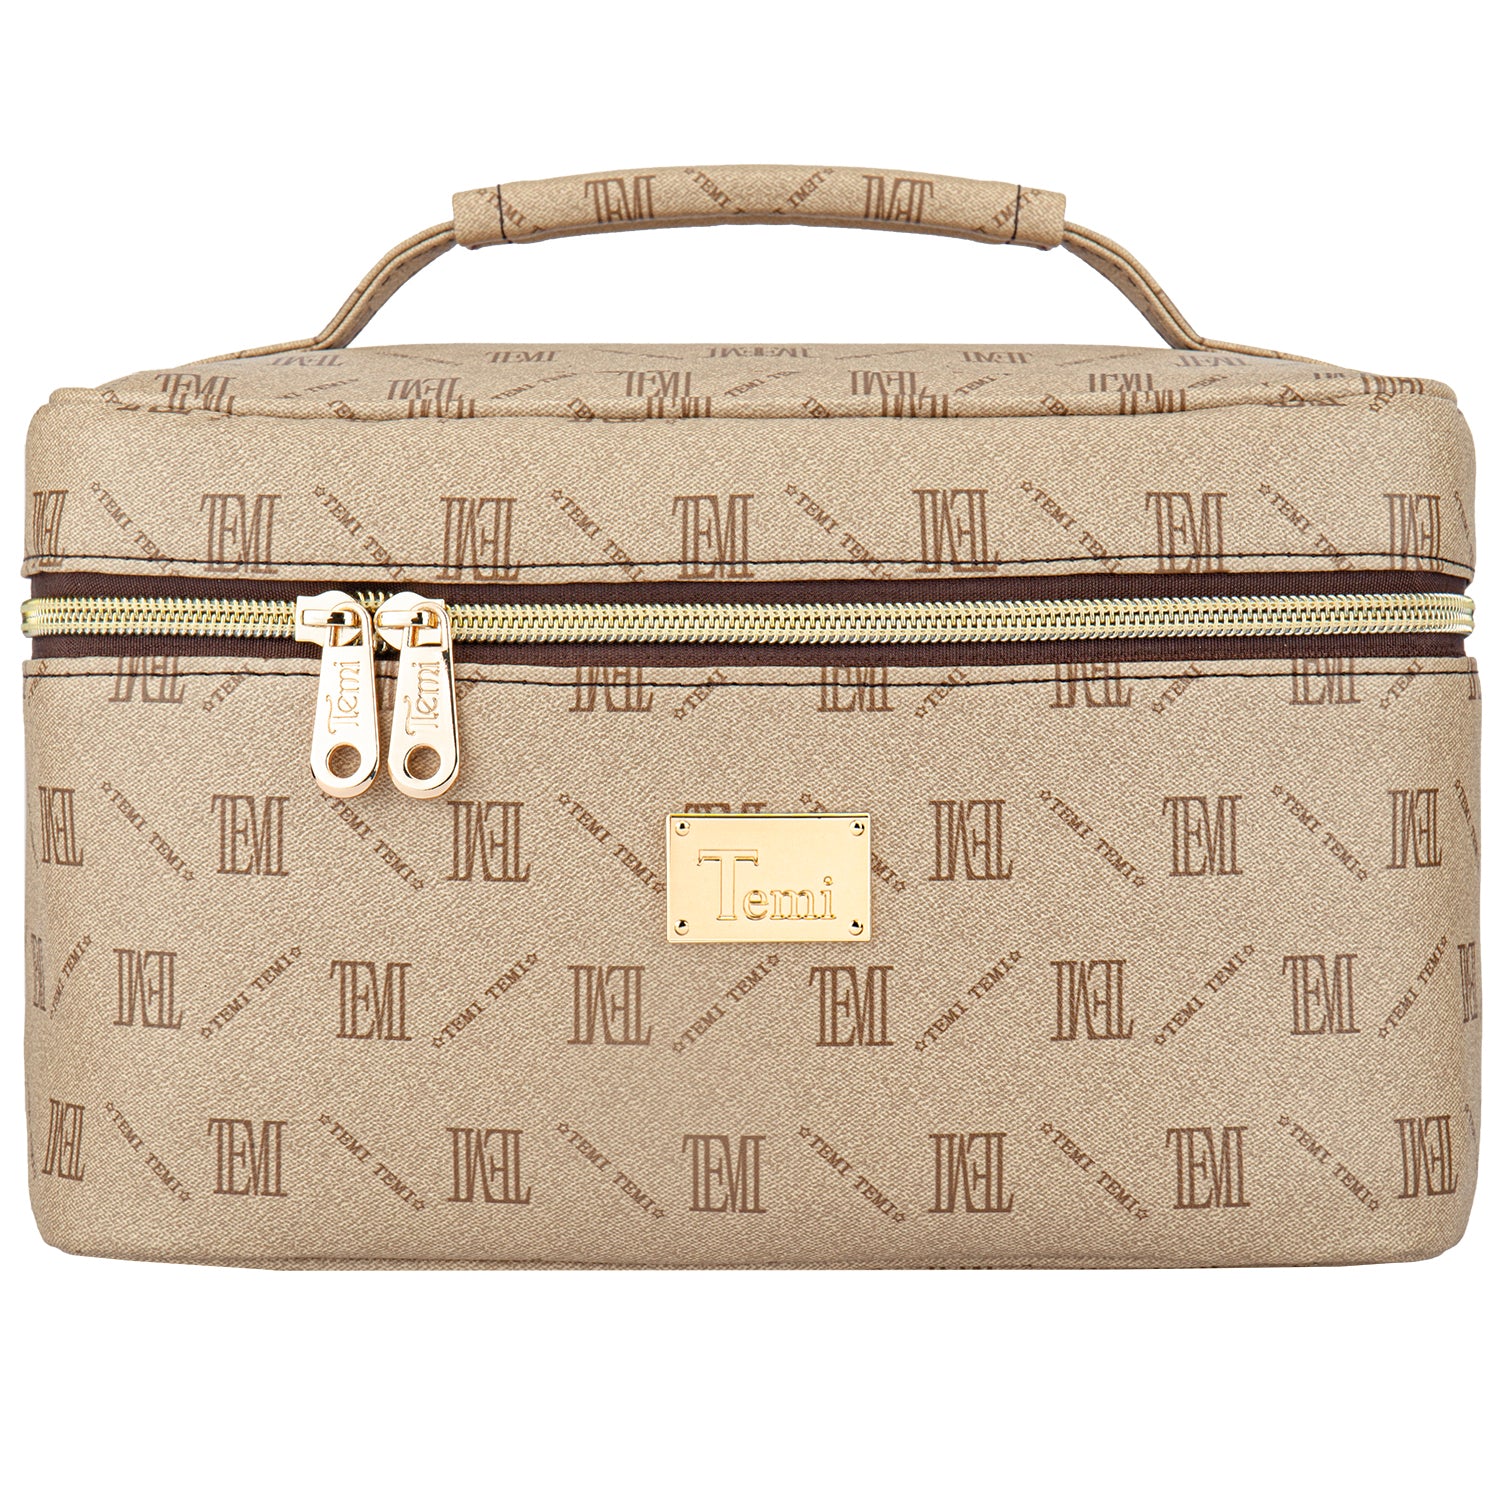 Louis Vuitton lunch bag